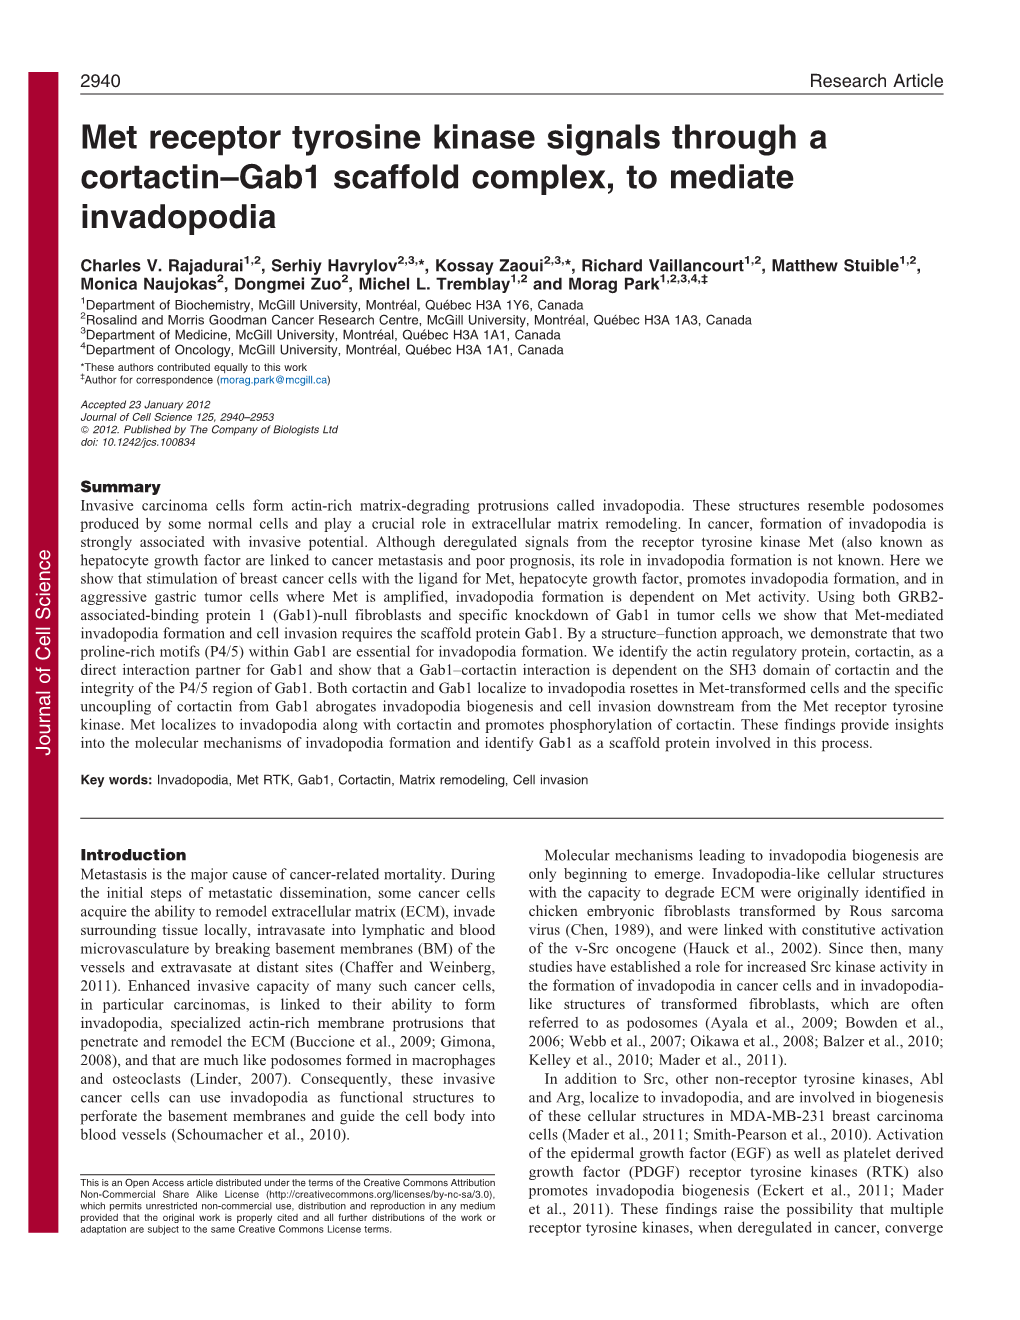 Met Receptor Tyrosine Kinase Signals Through a Cortactin–Gab1 Scaffold